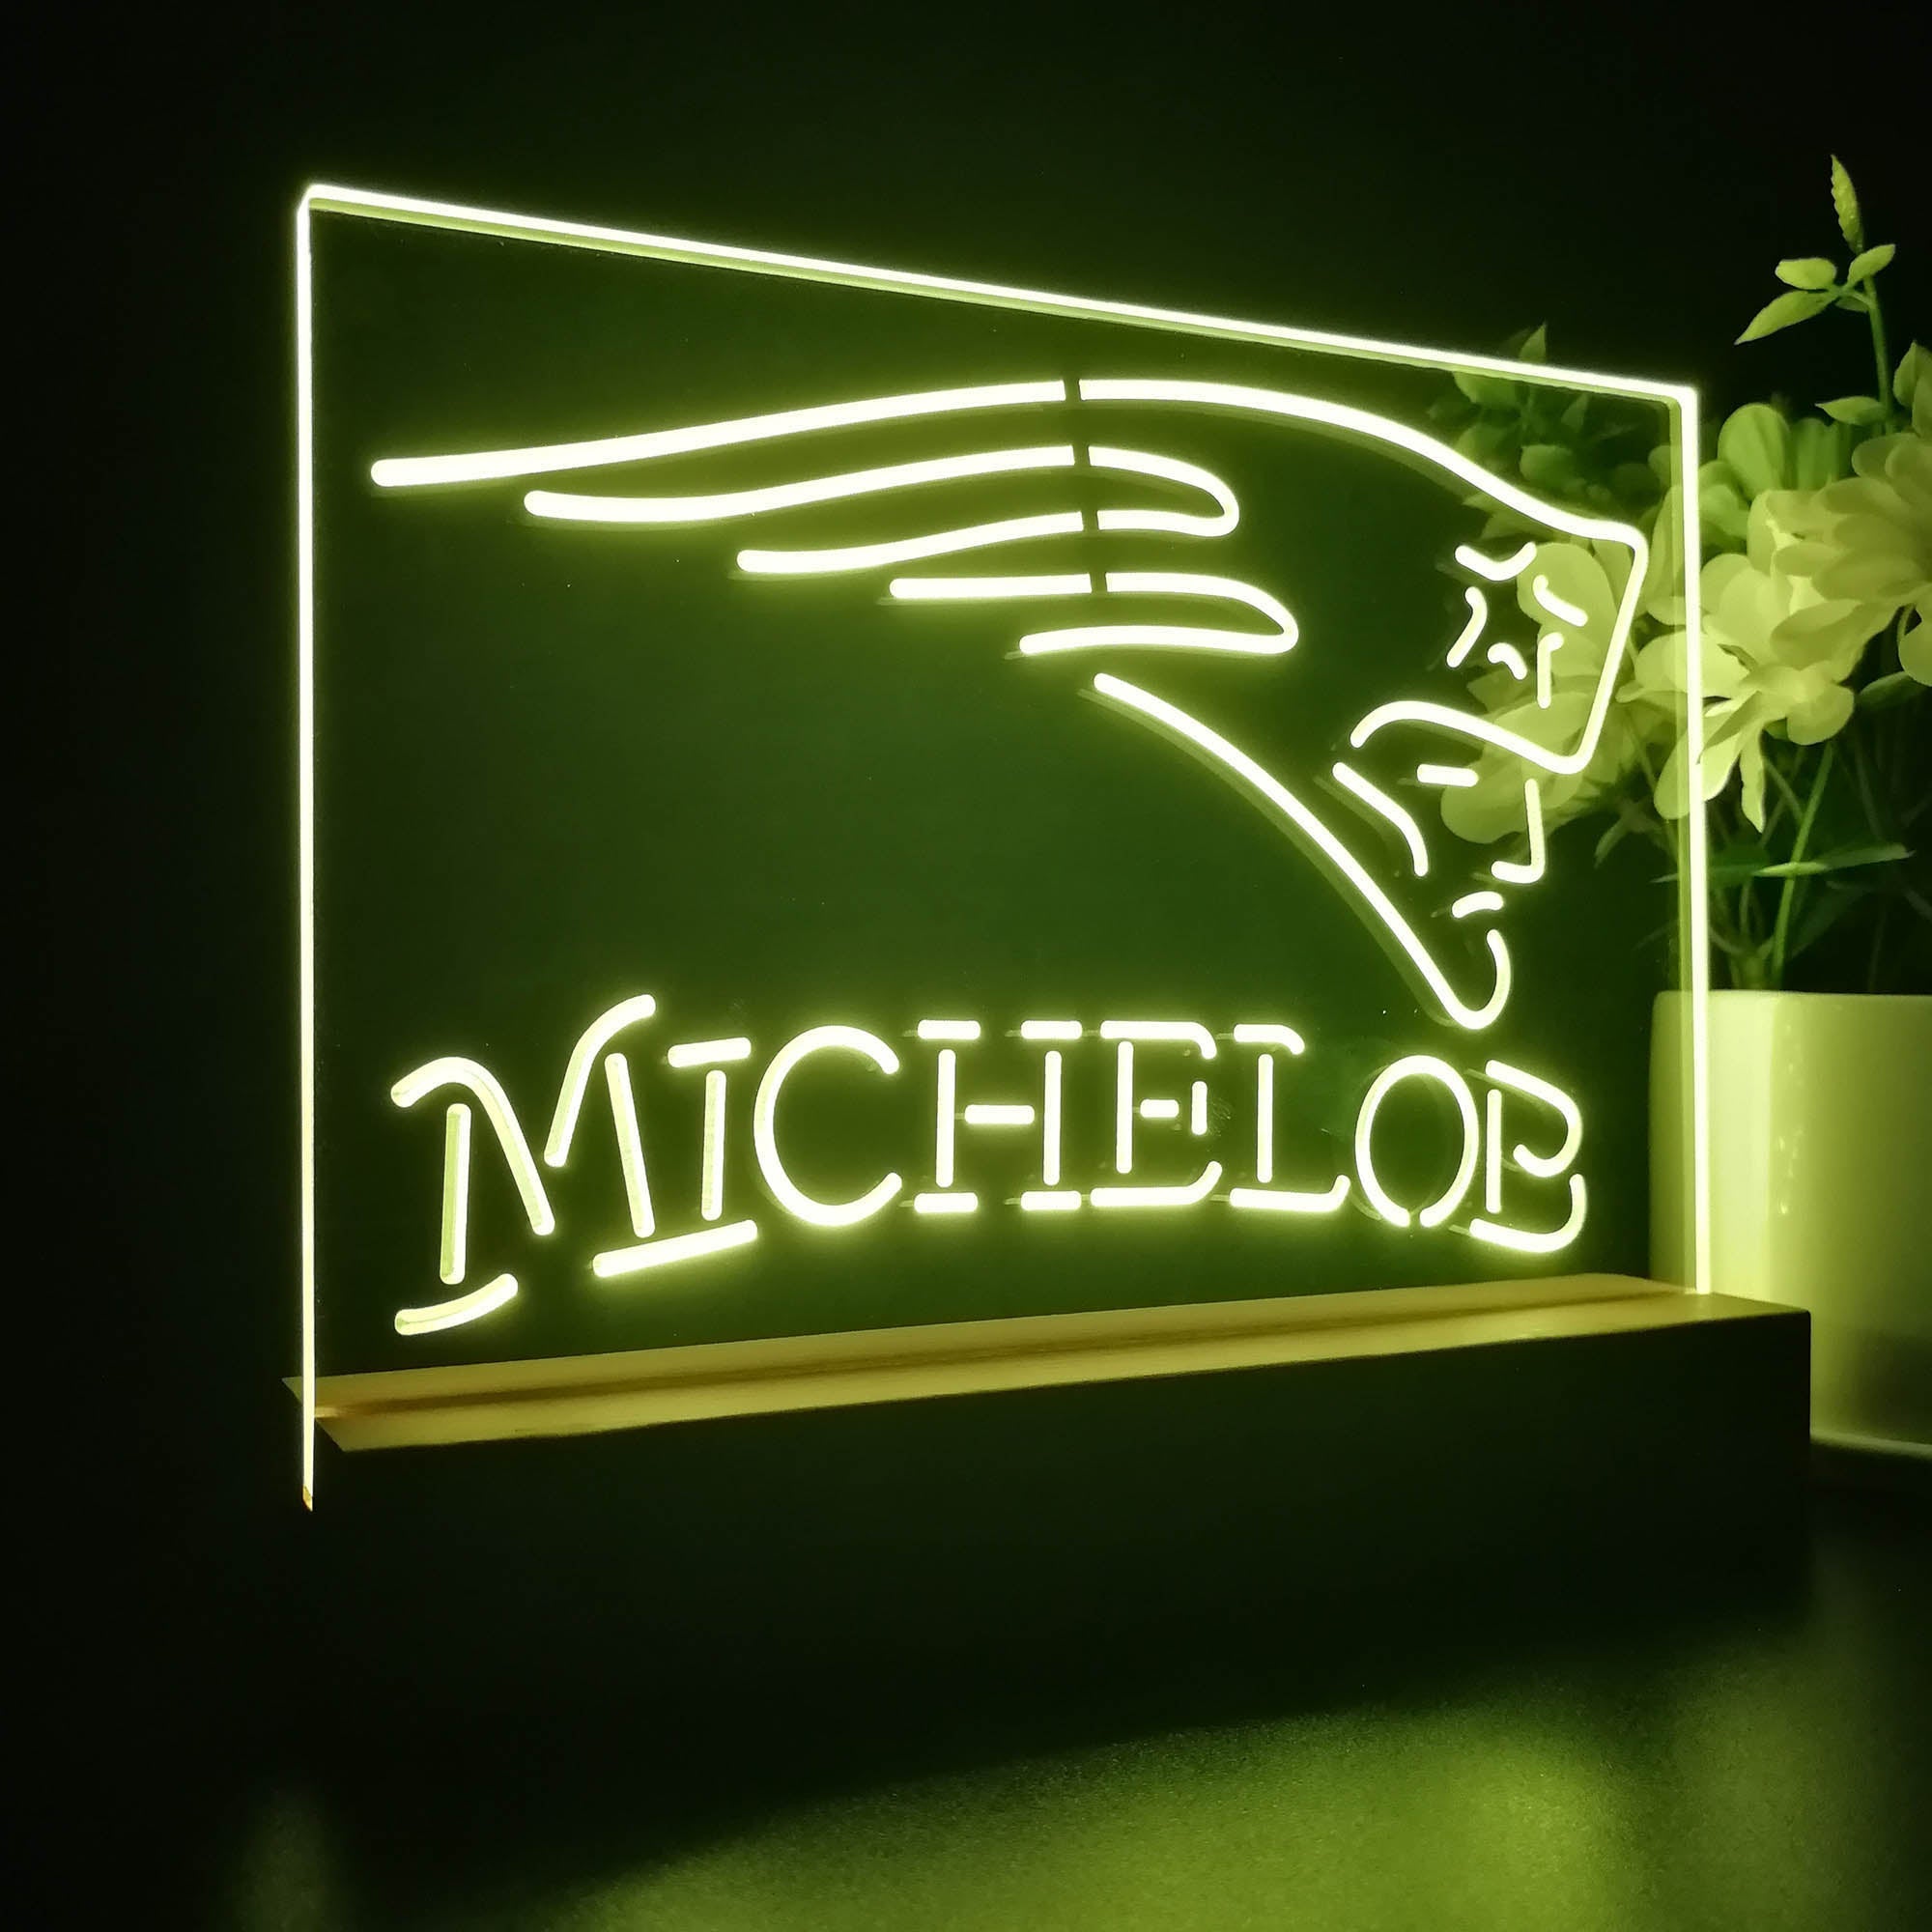 New England Patriots Michelob Bar 3D Illusion Night Light Desk Lamp